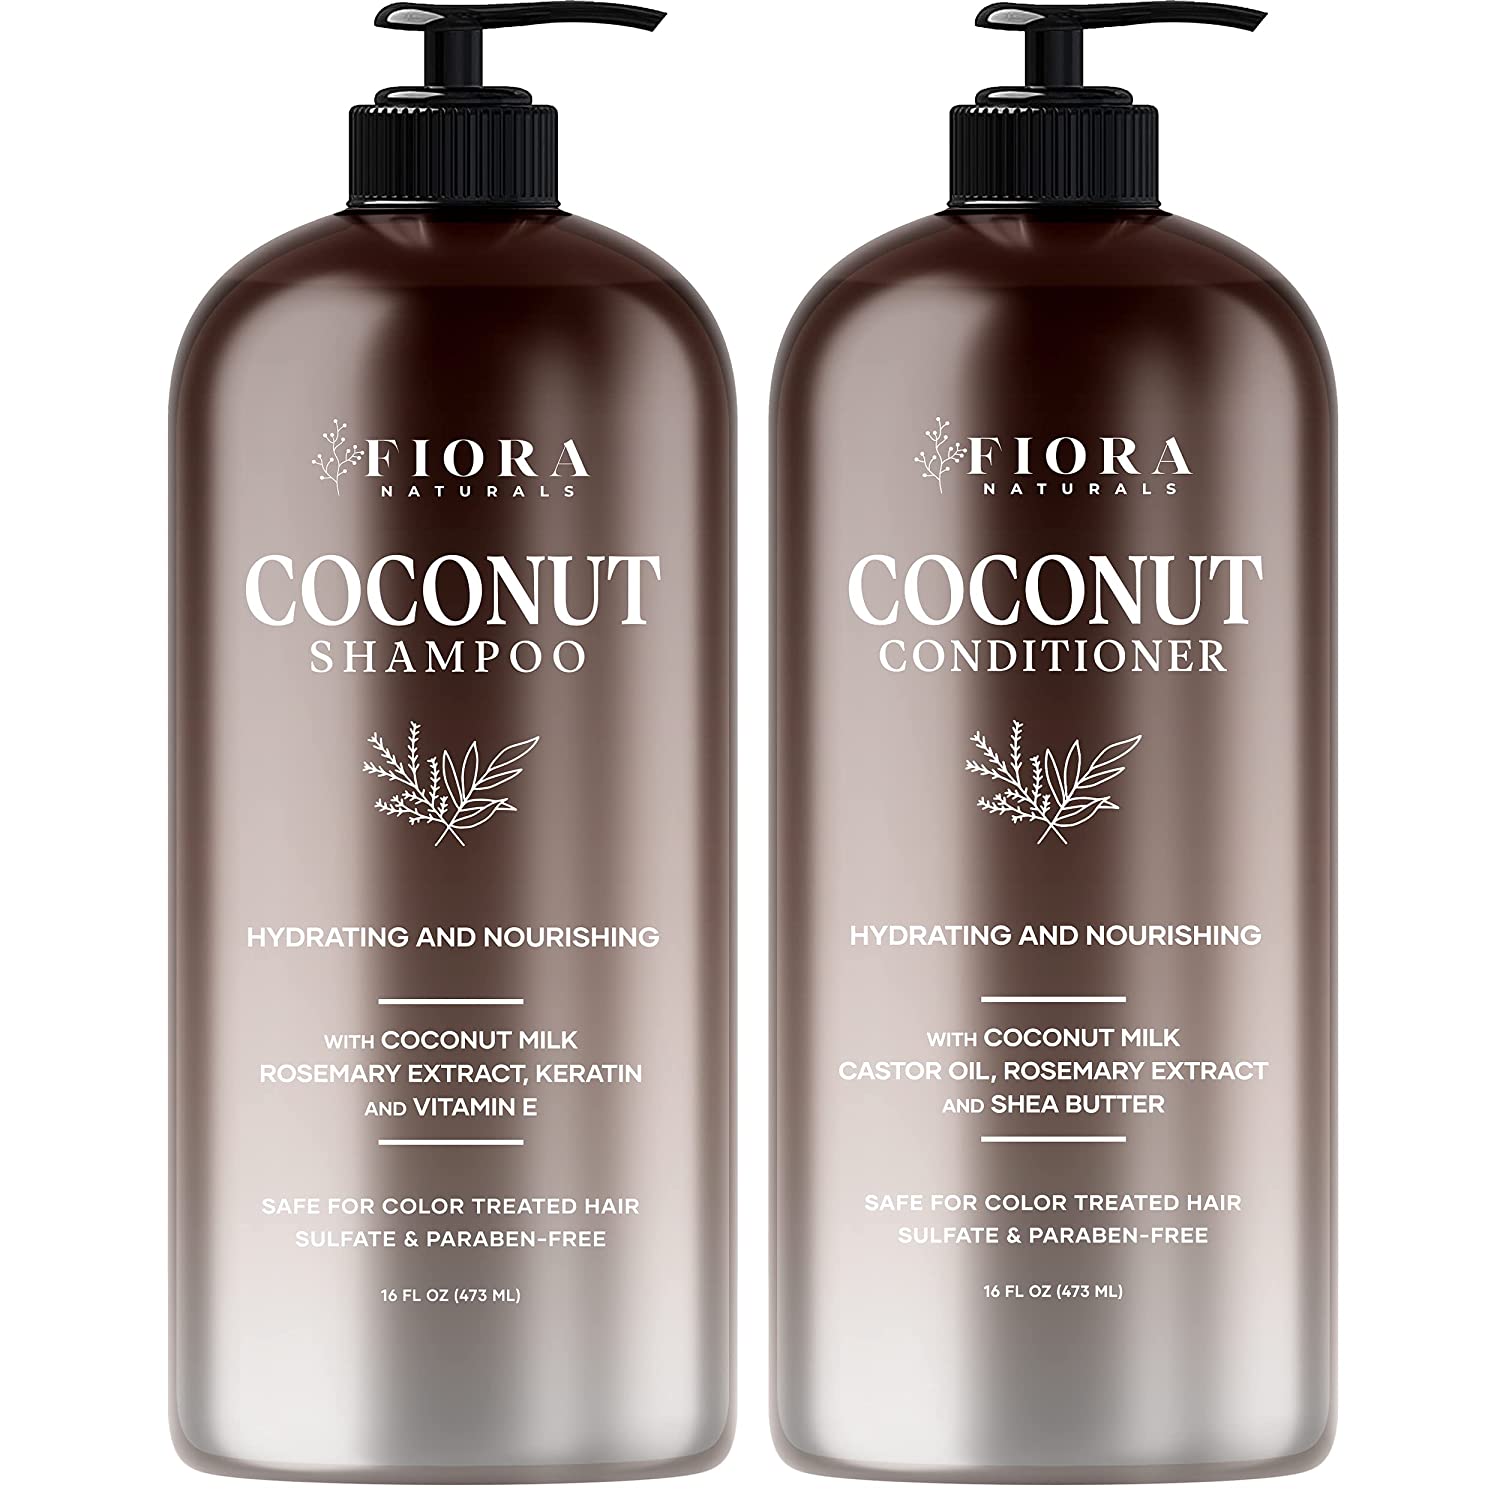 karakterisere Skuespiller Advarsel Coconut Shampoo and Conditioner Set - Fiora Naturals